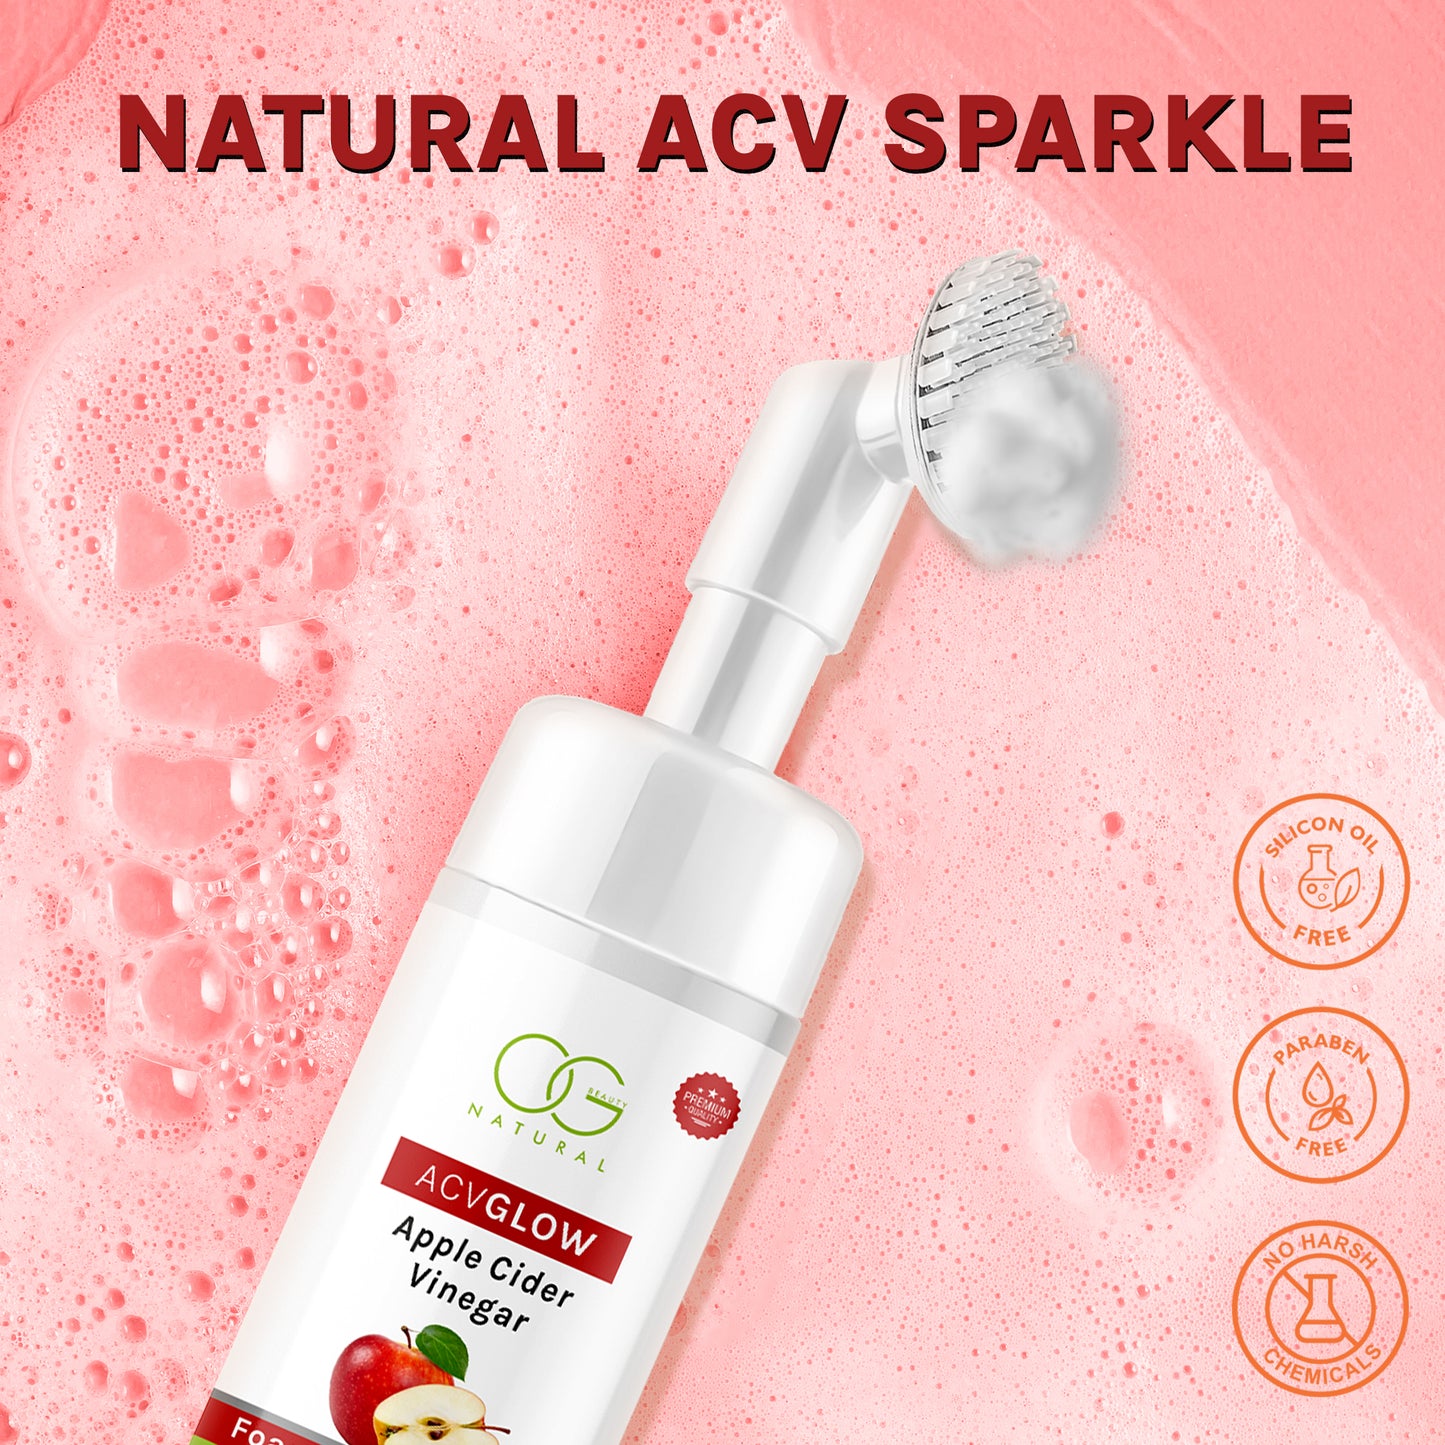 Natural ACV Sparkle